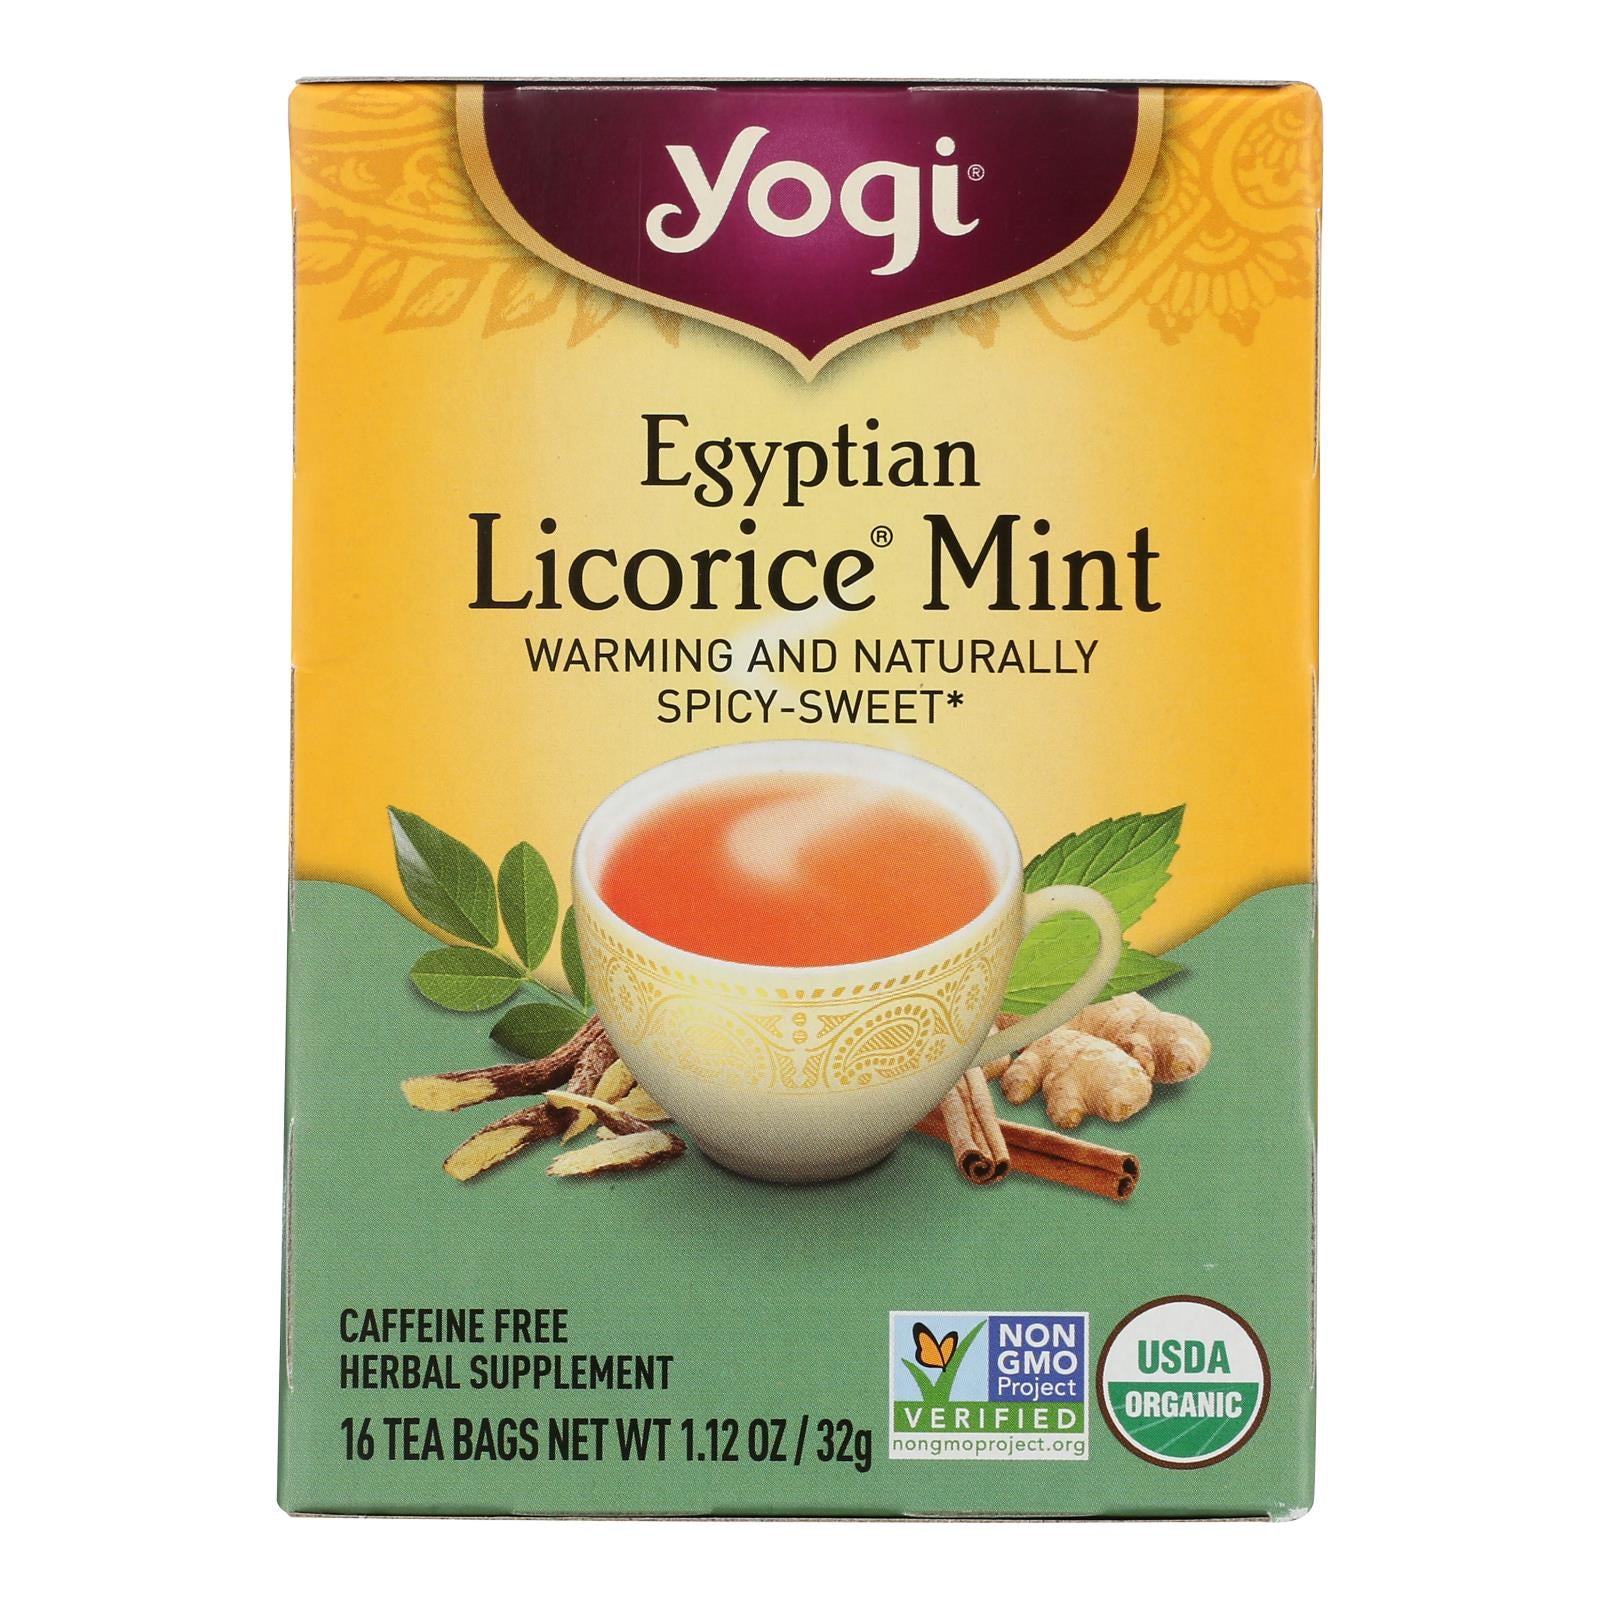 Yogi Egyptian Licorice - Mint - Case Of 6 - 16 Bags